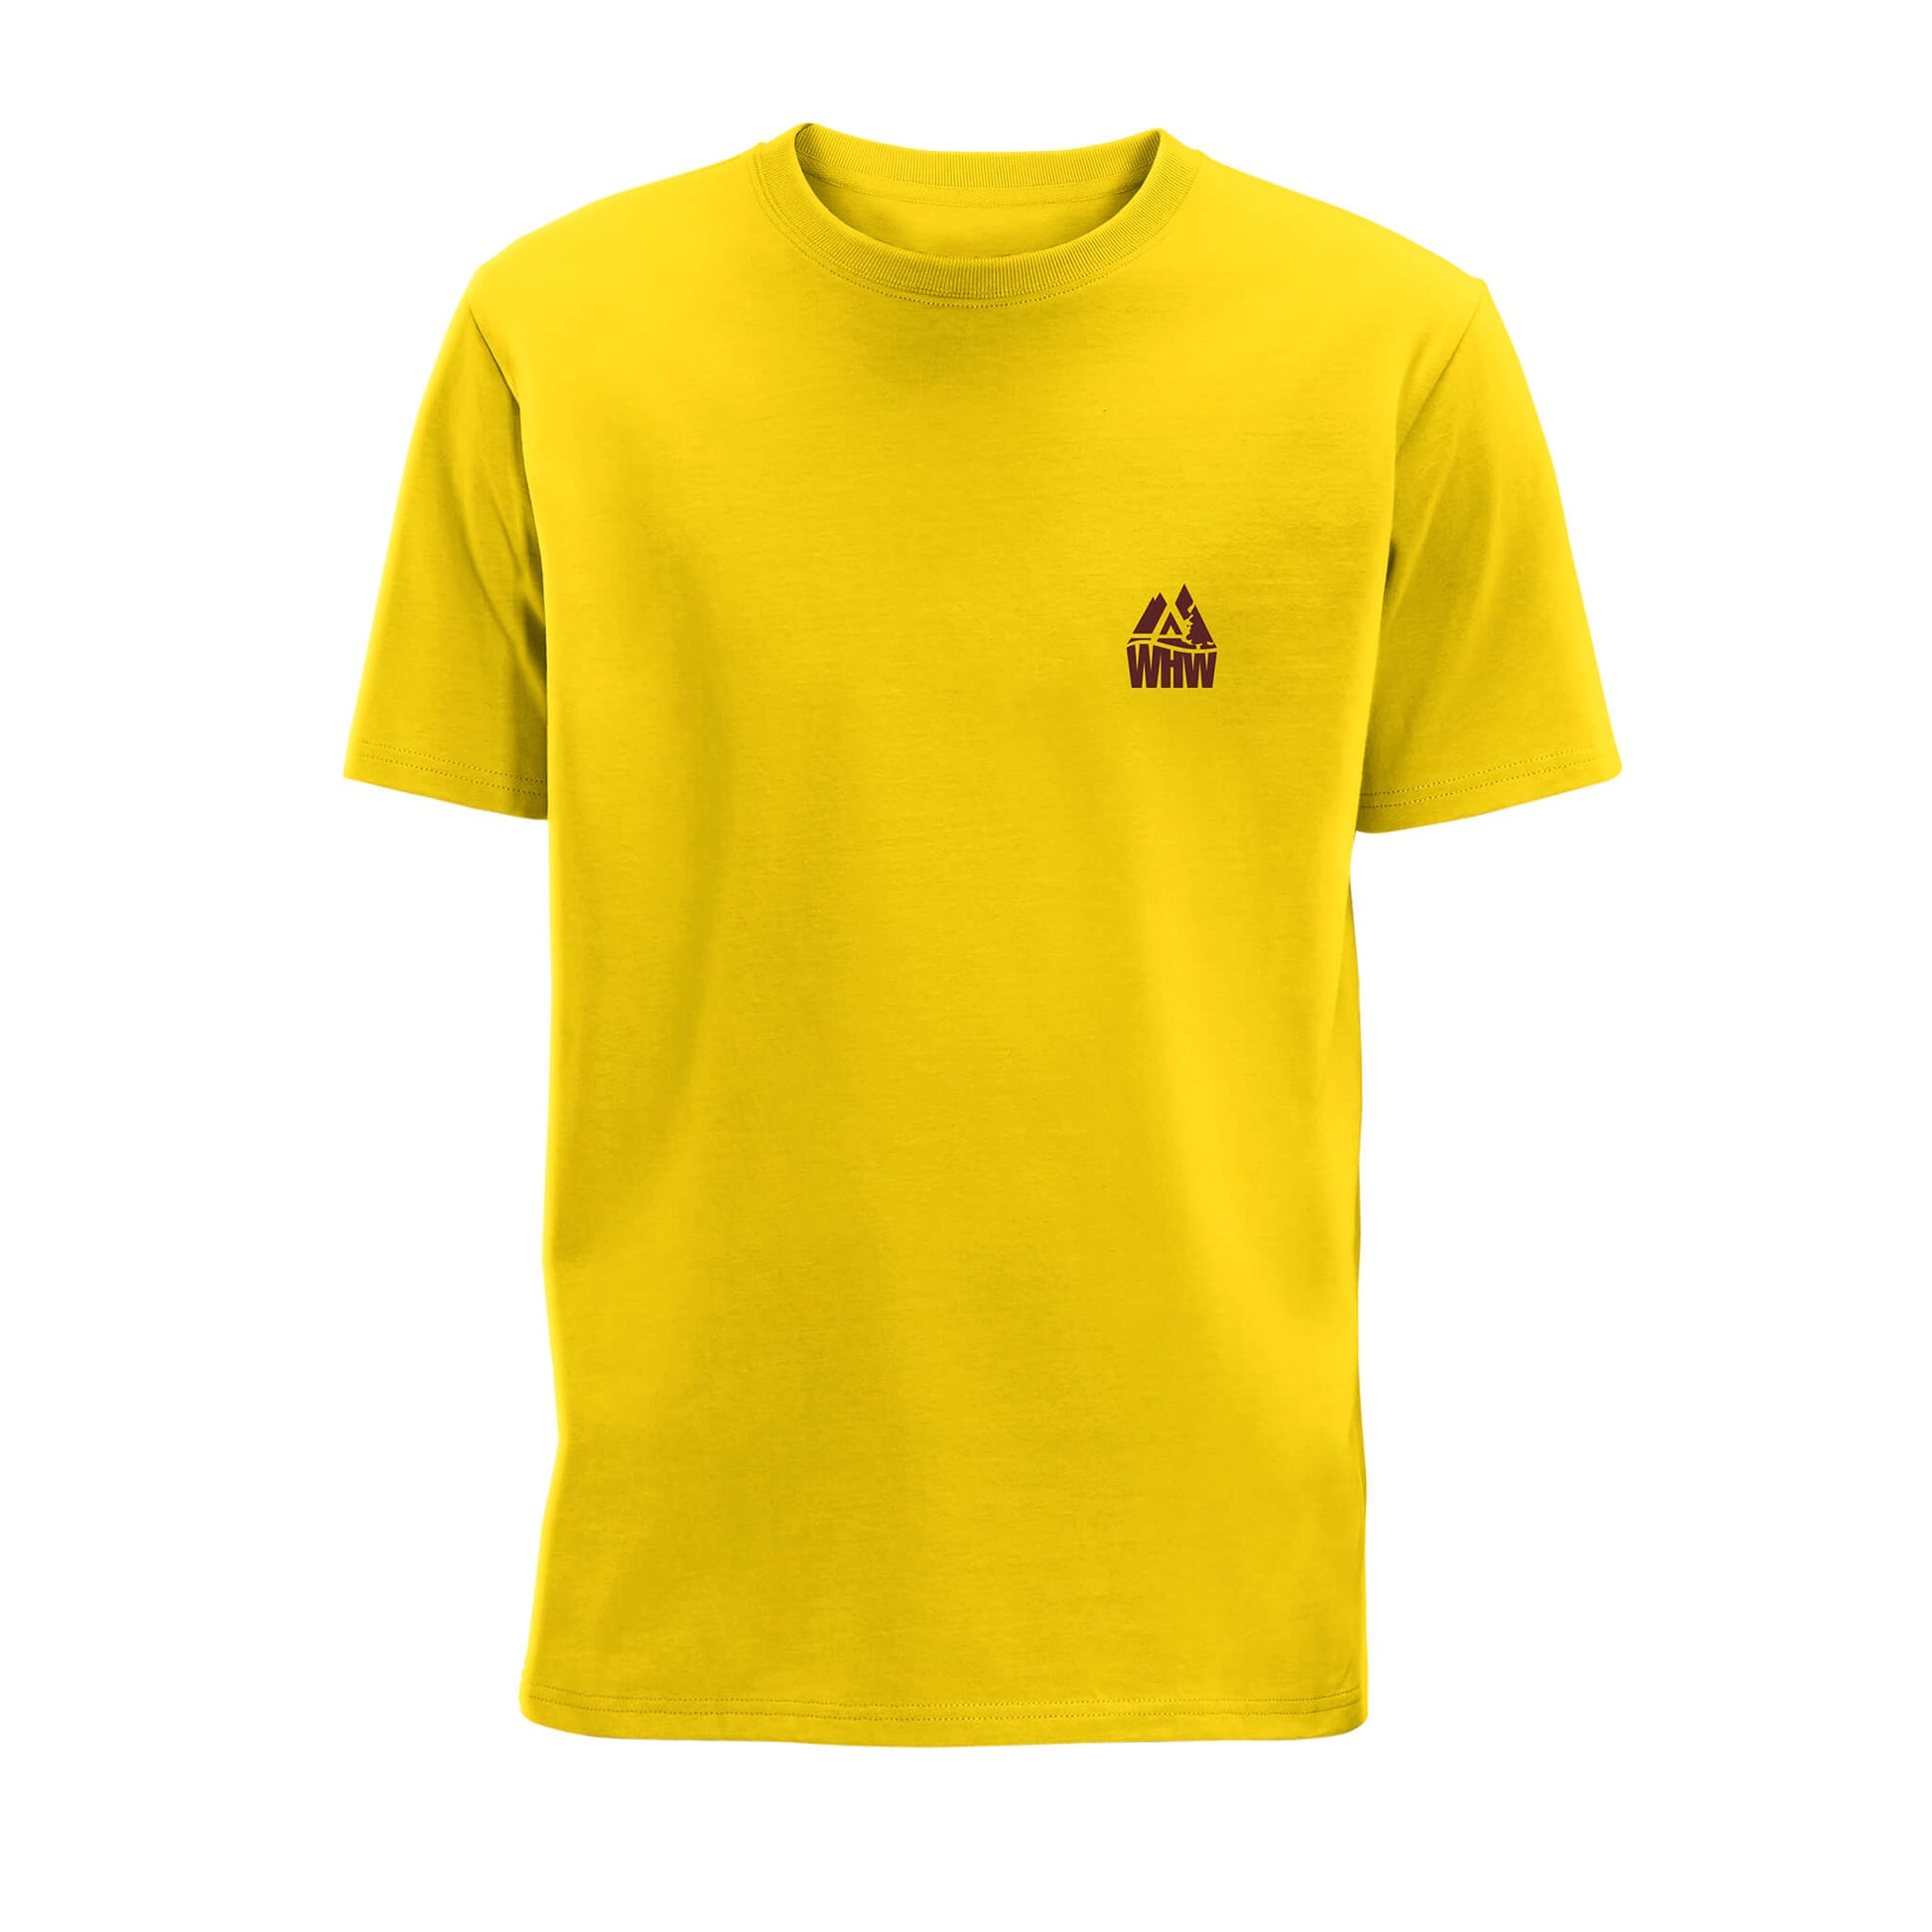 Mountain Organic Cotton T-Shirt - Yellow Fizz - Front View - West Highland Way